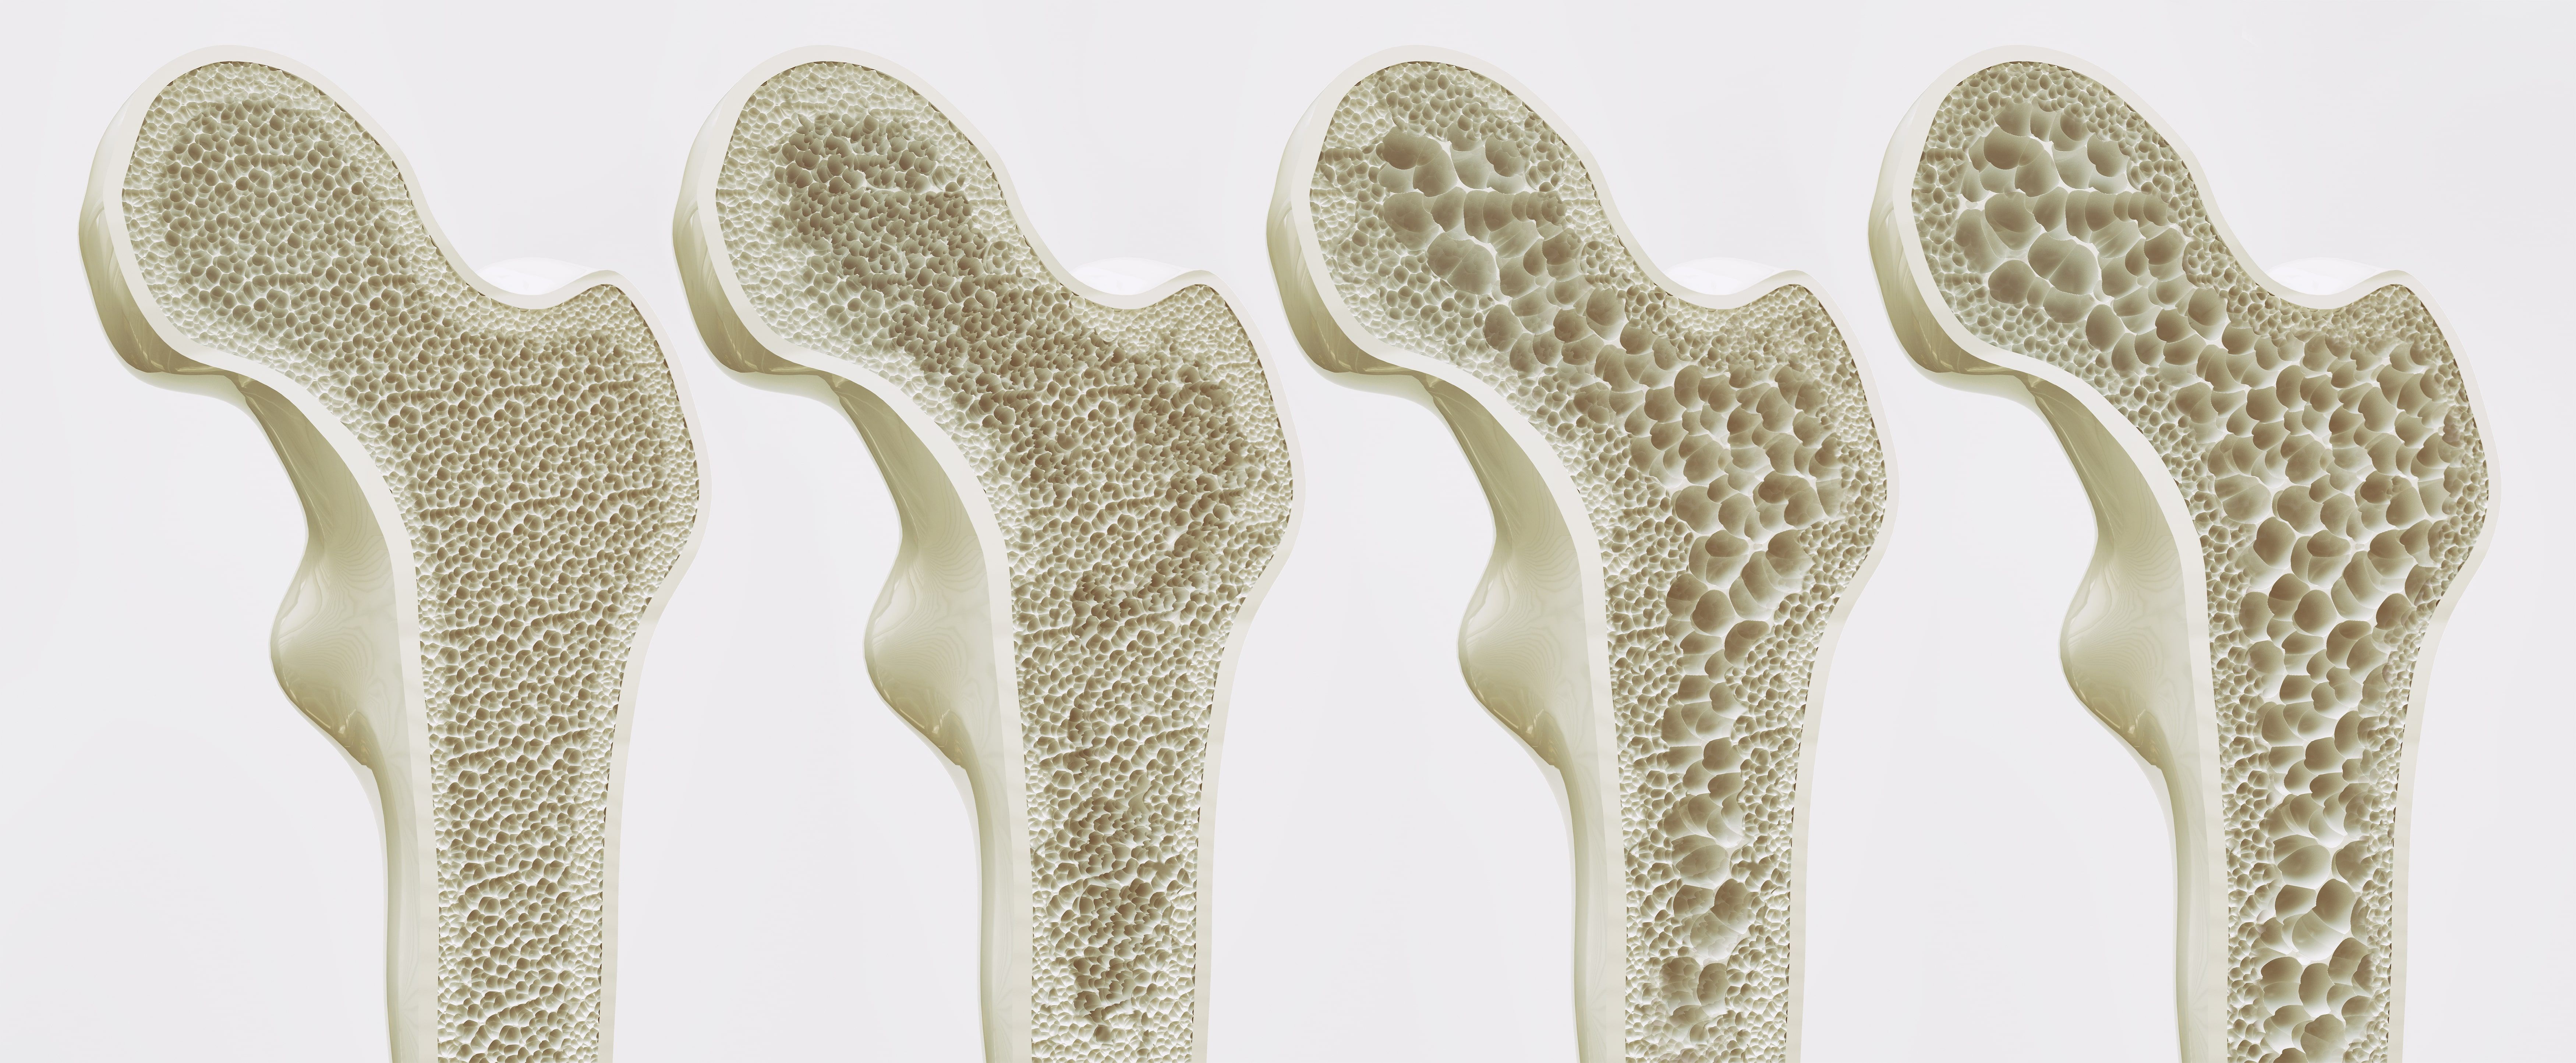 The Bone Density Test - Space Coast OrthopedicMerritt Orthopedics